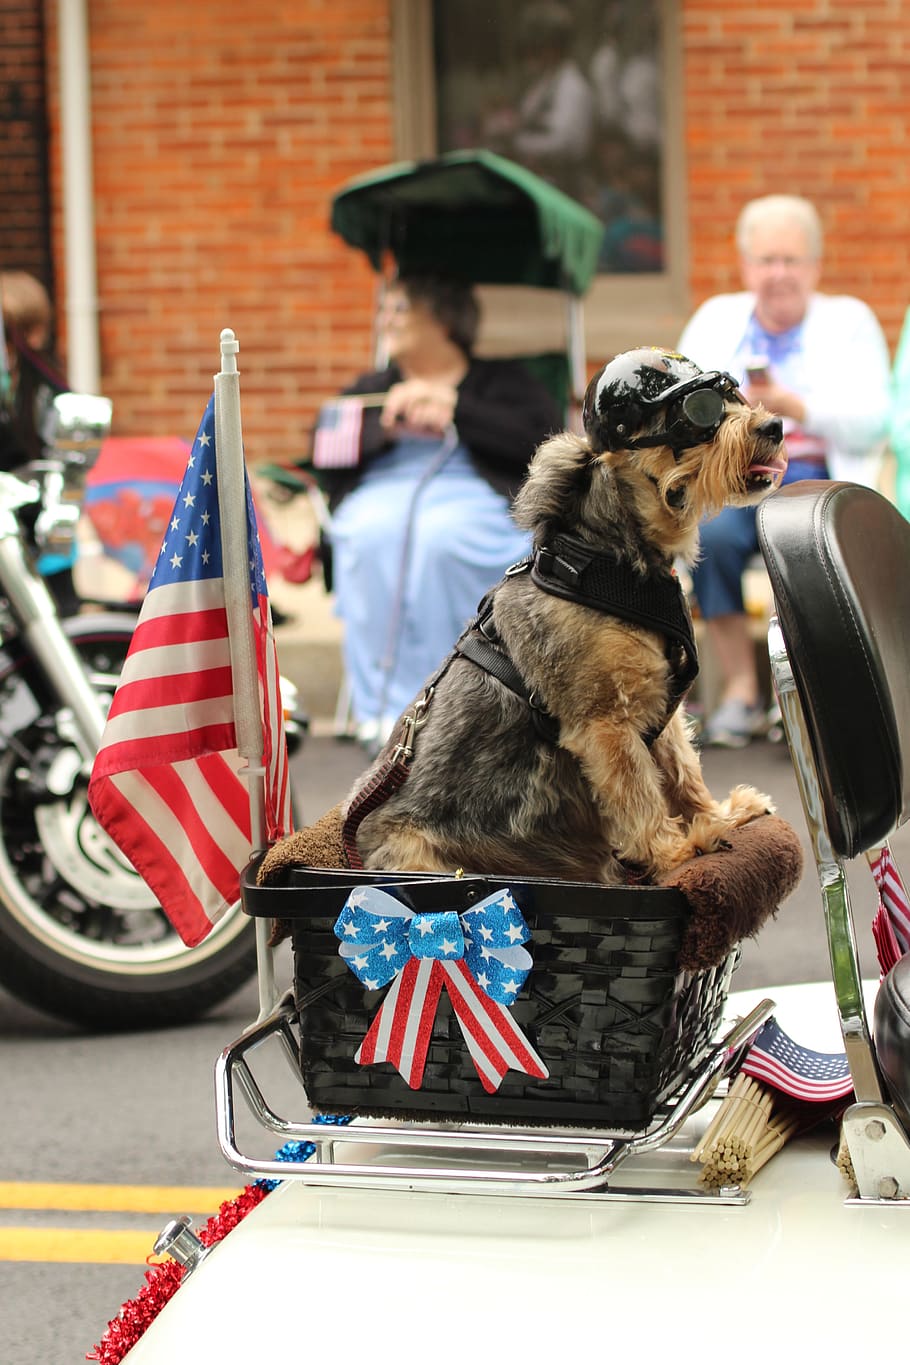 HD wallpaper: dog, parade, patriotic, motorcycle, celebration, pet